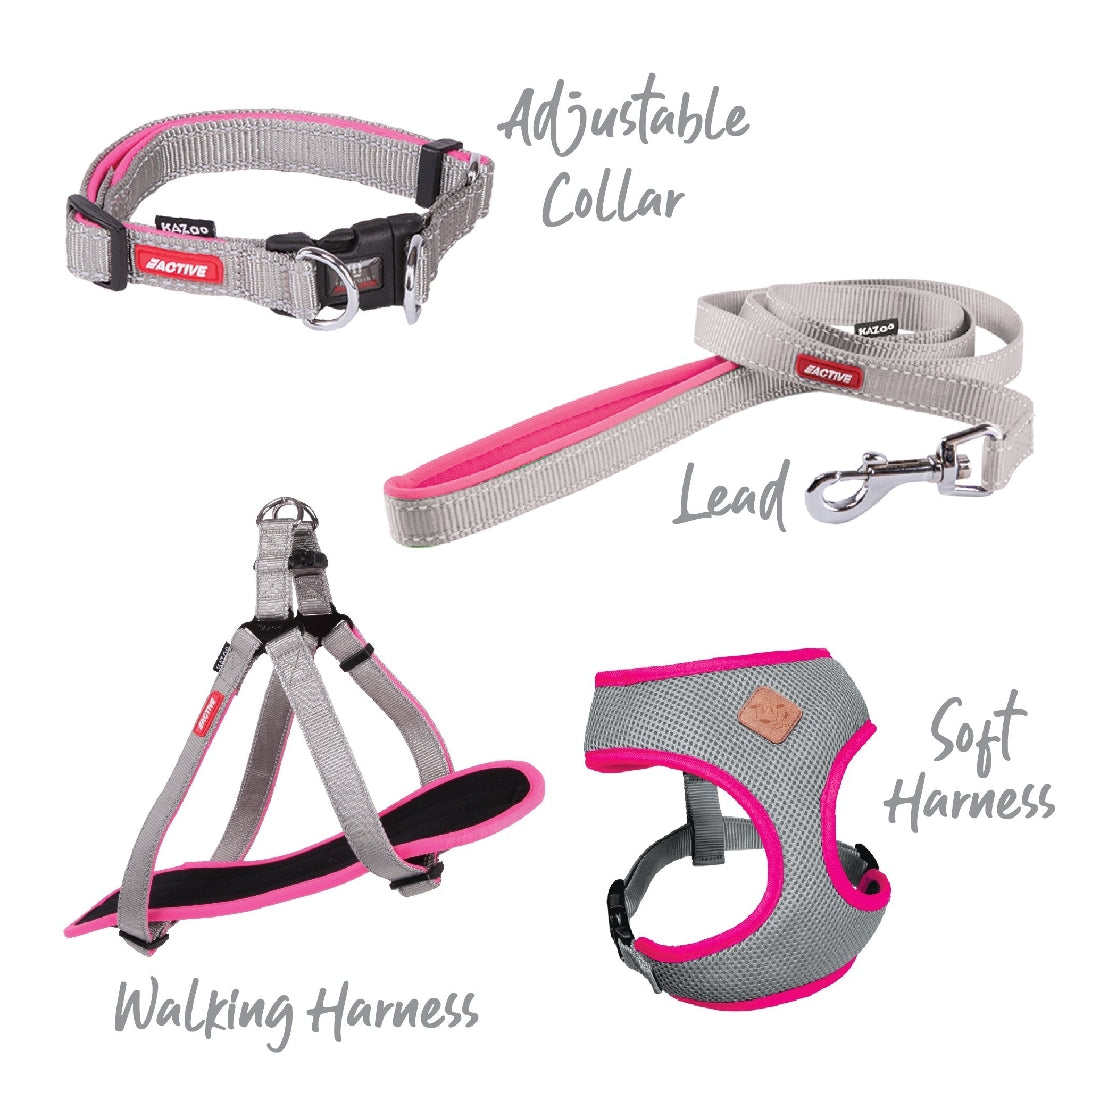 Kazoo Dog Collar Active Adjustable Silver & Pink-Ascot Saddlery-The Equestrian